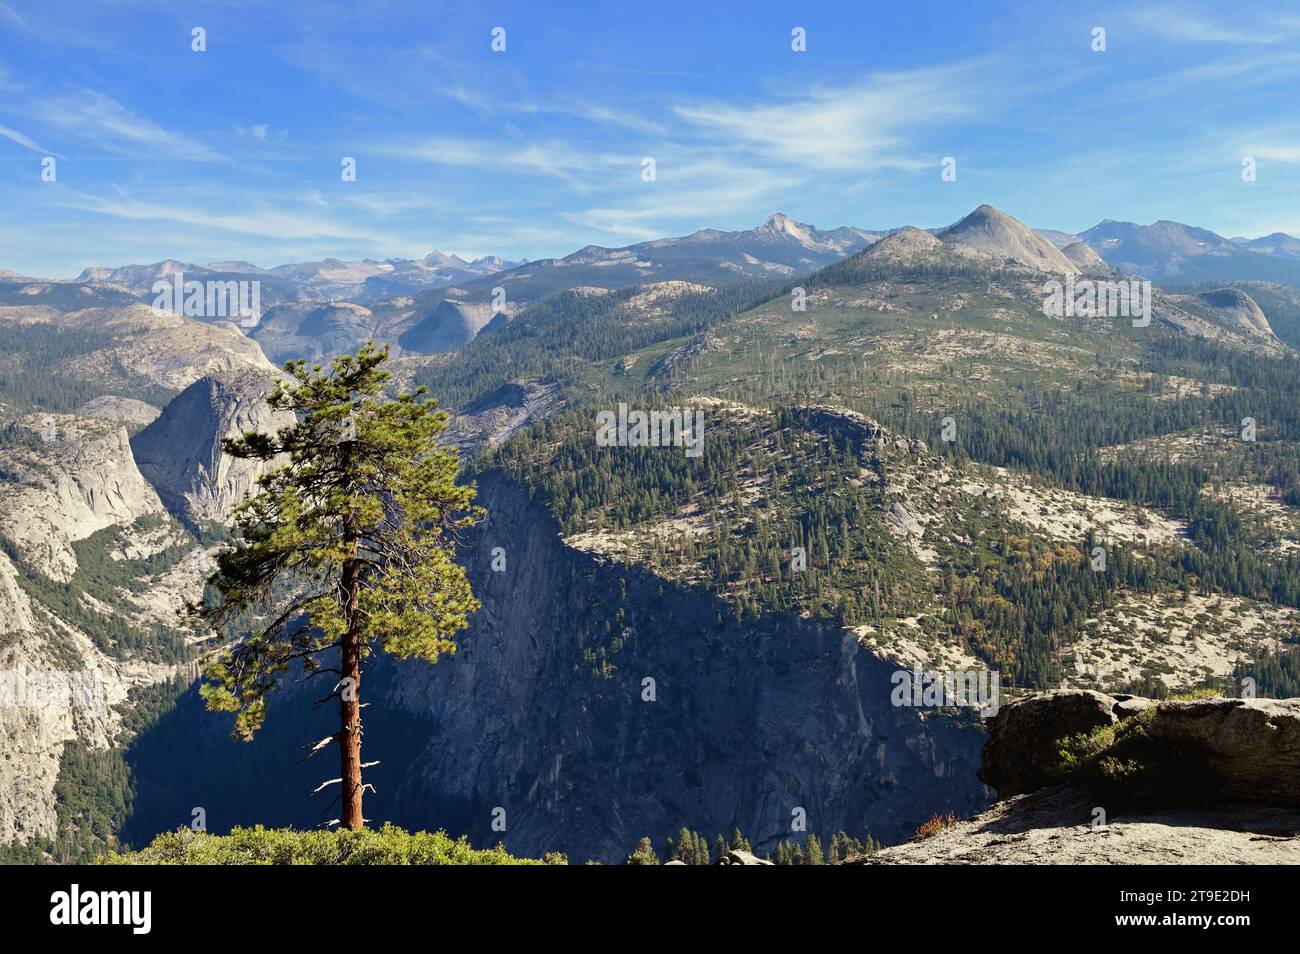 Yosemite National Park, California, USA. A spectacular view of the Clark Range mountains beyond Yosemite Valley. Stock Photo